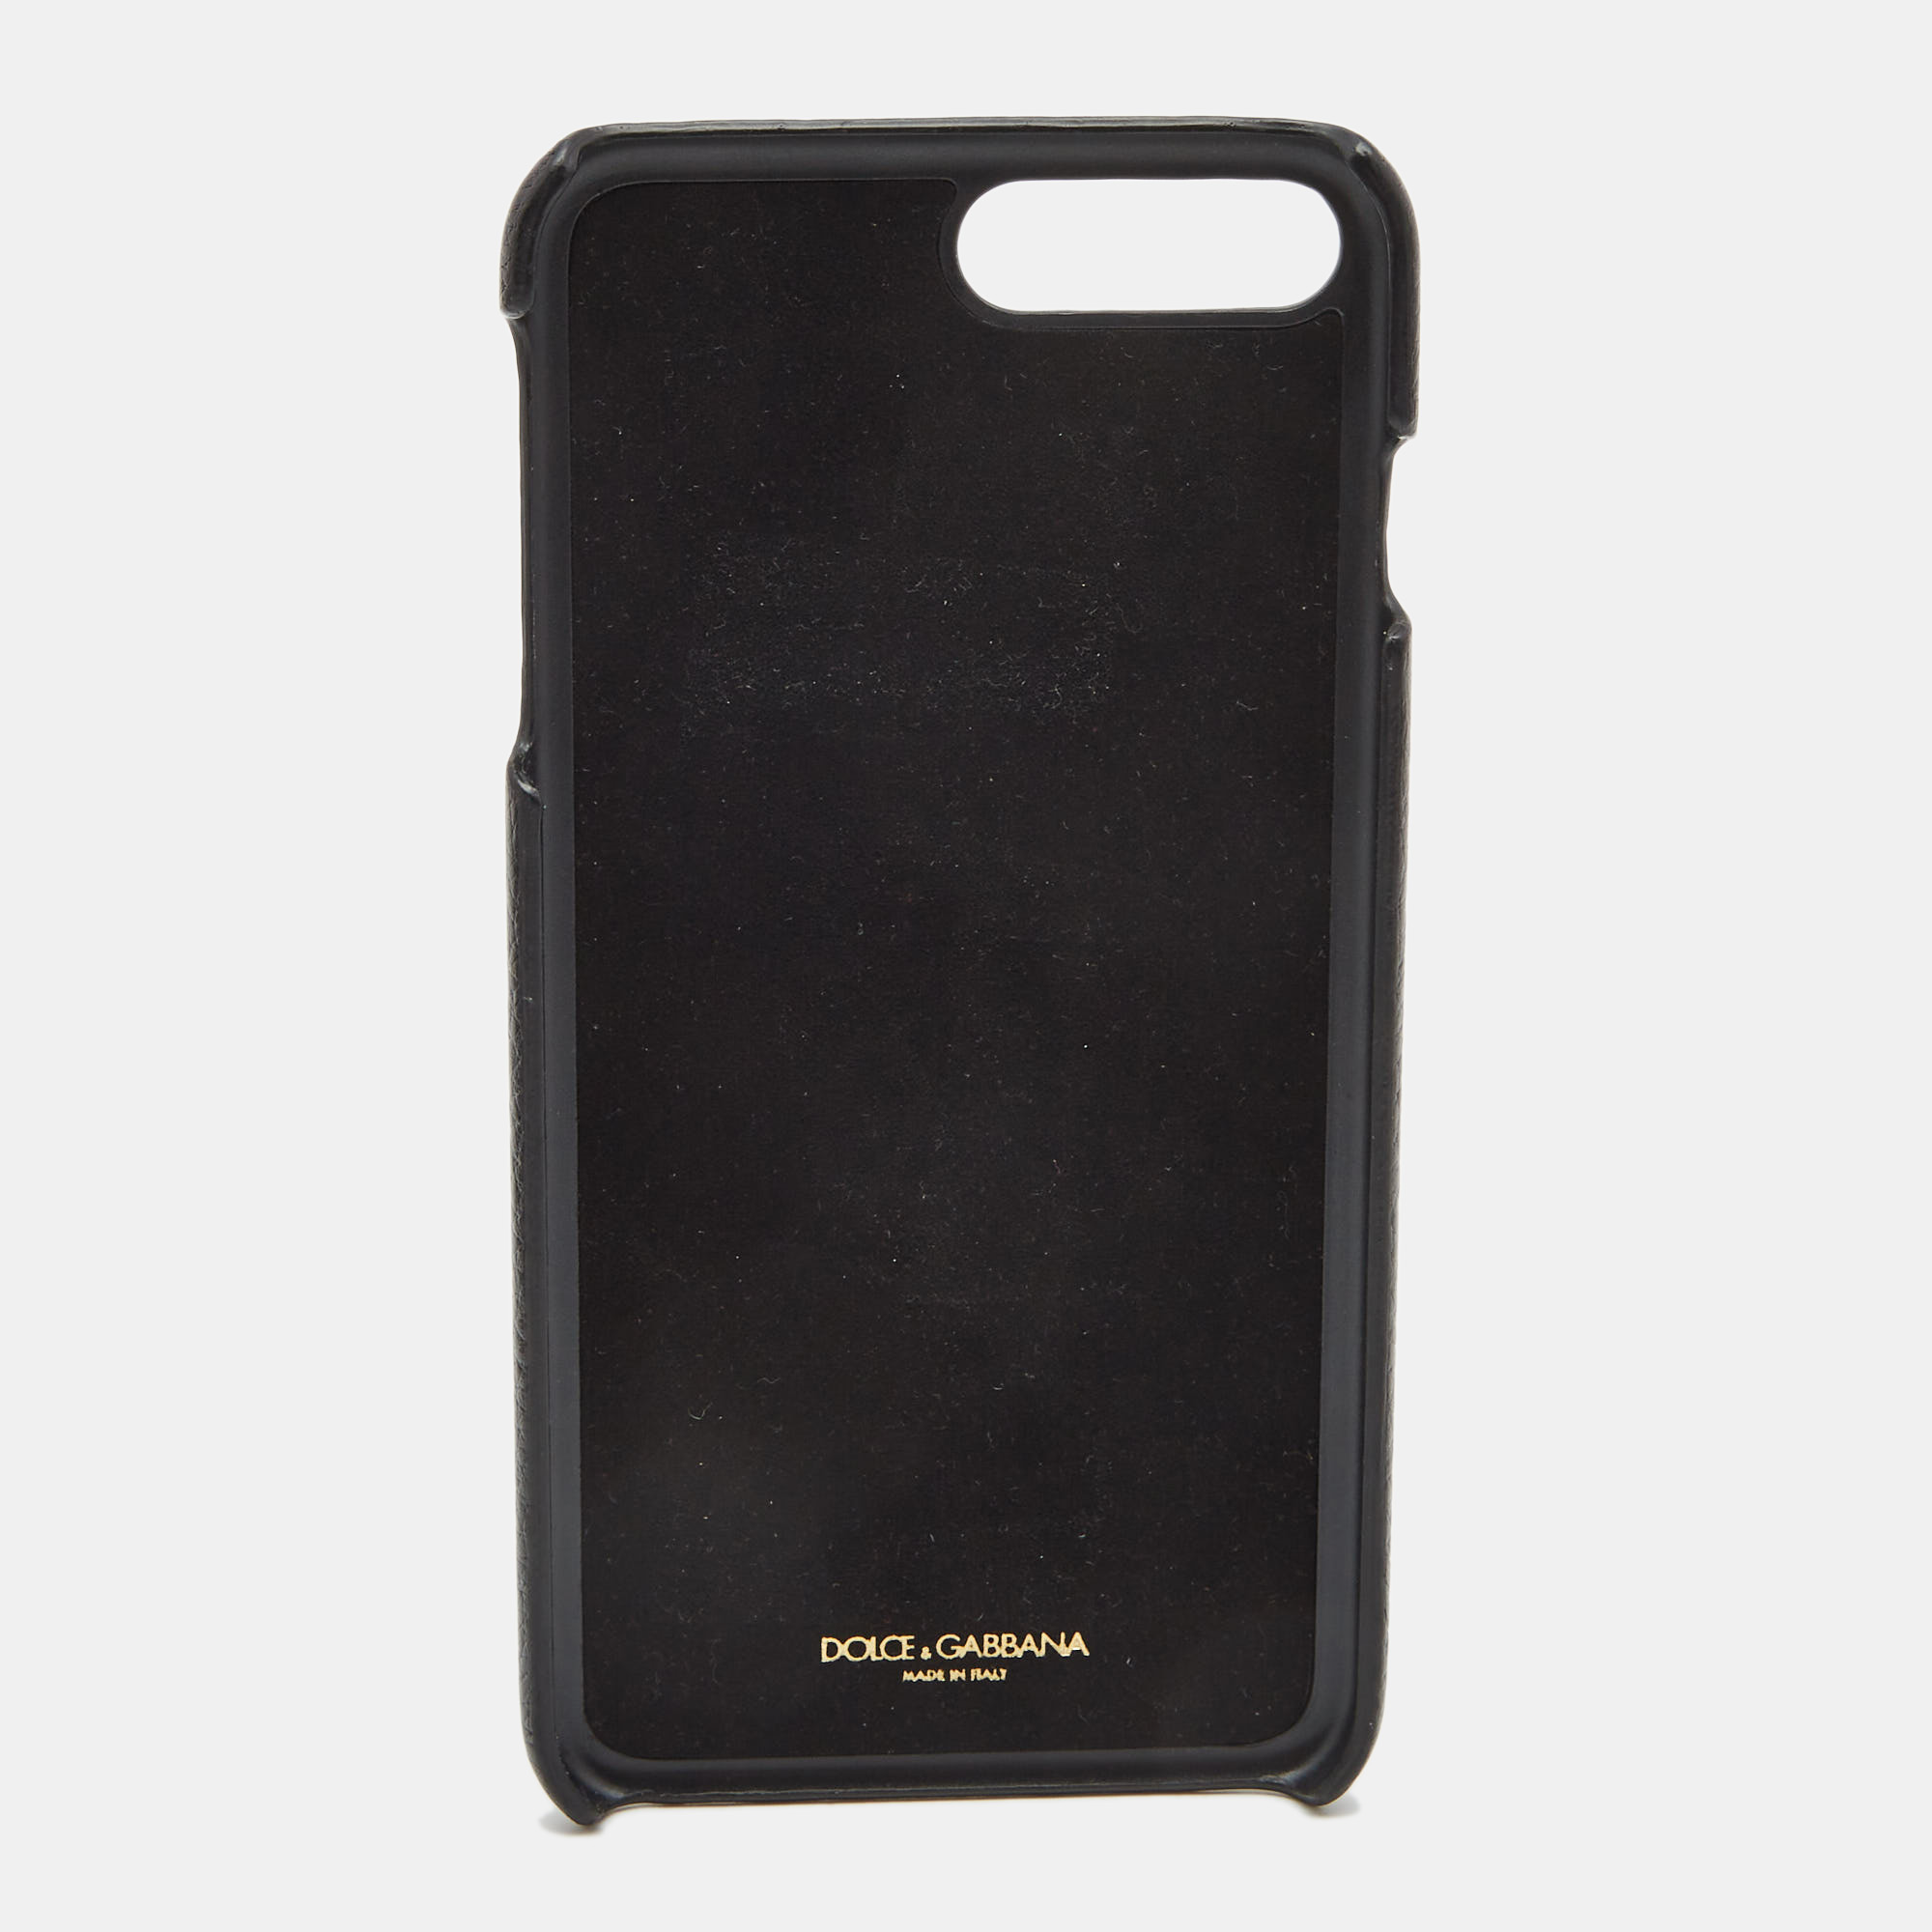 

Dolce & Gabbana Black Radio iPhone 7Plus Phone Case